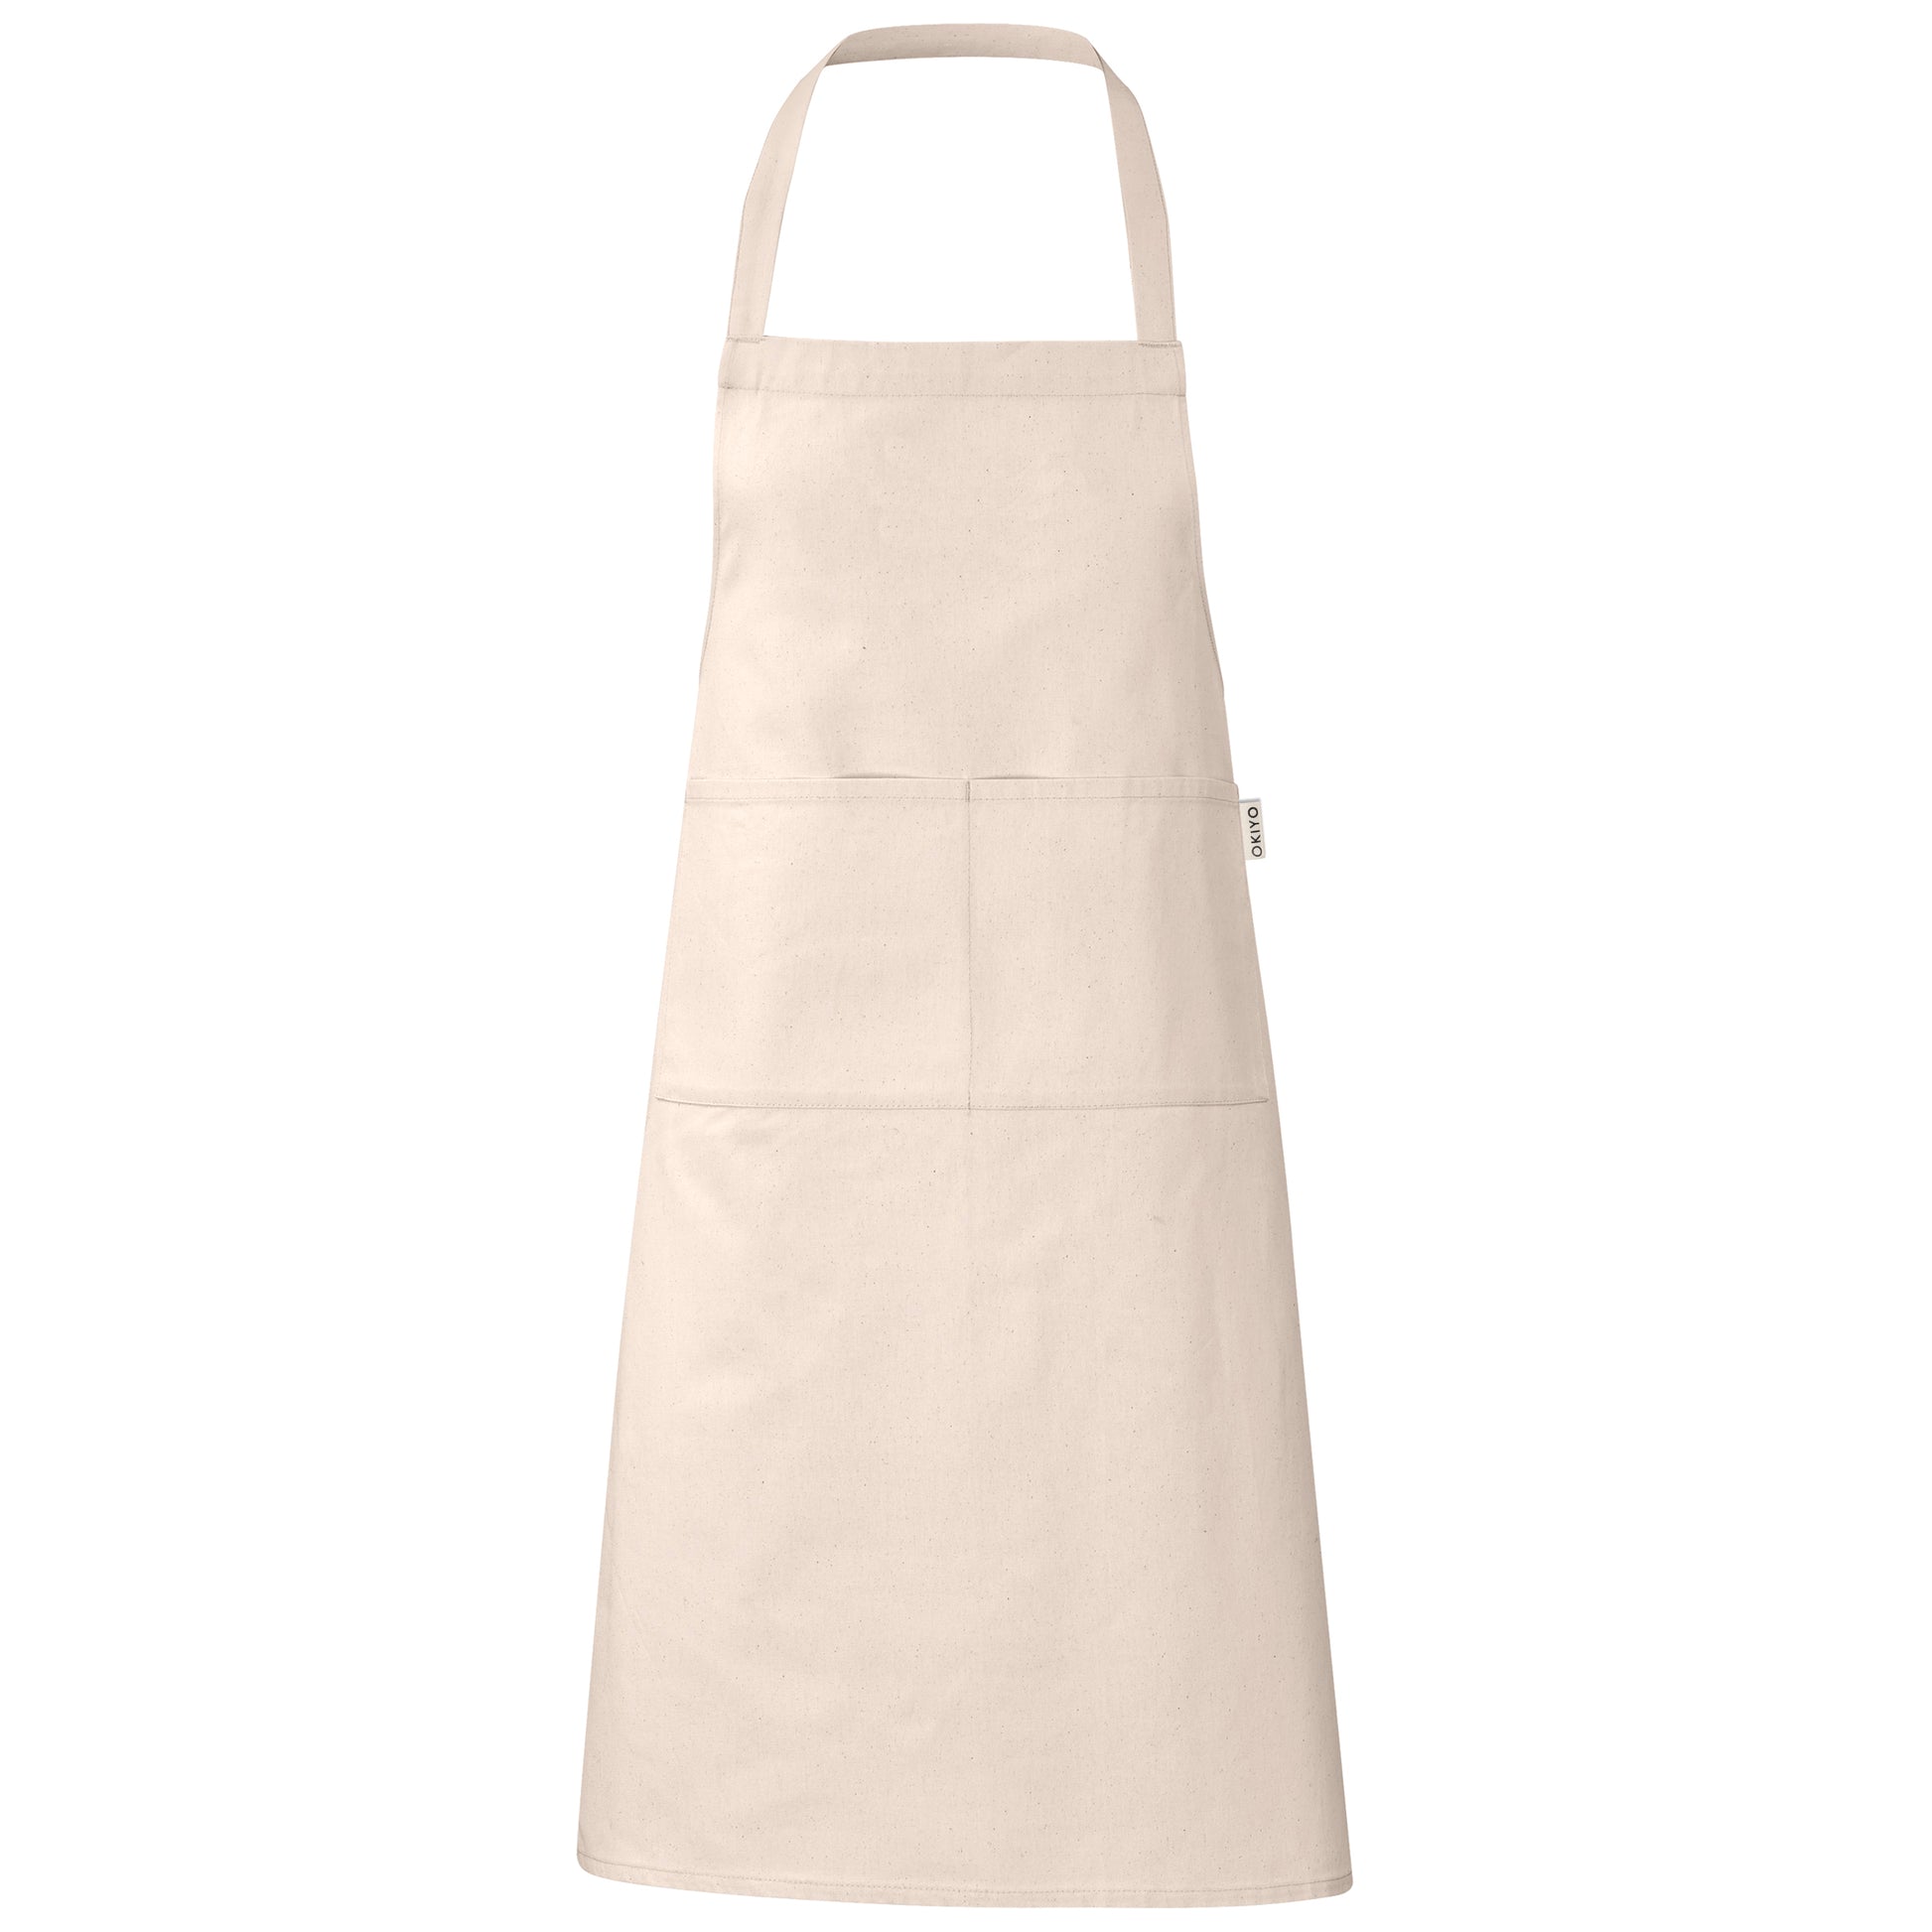 Personalised apron - stone colour